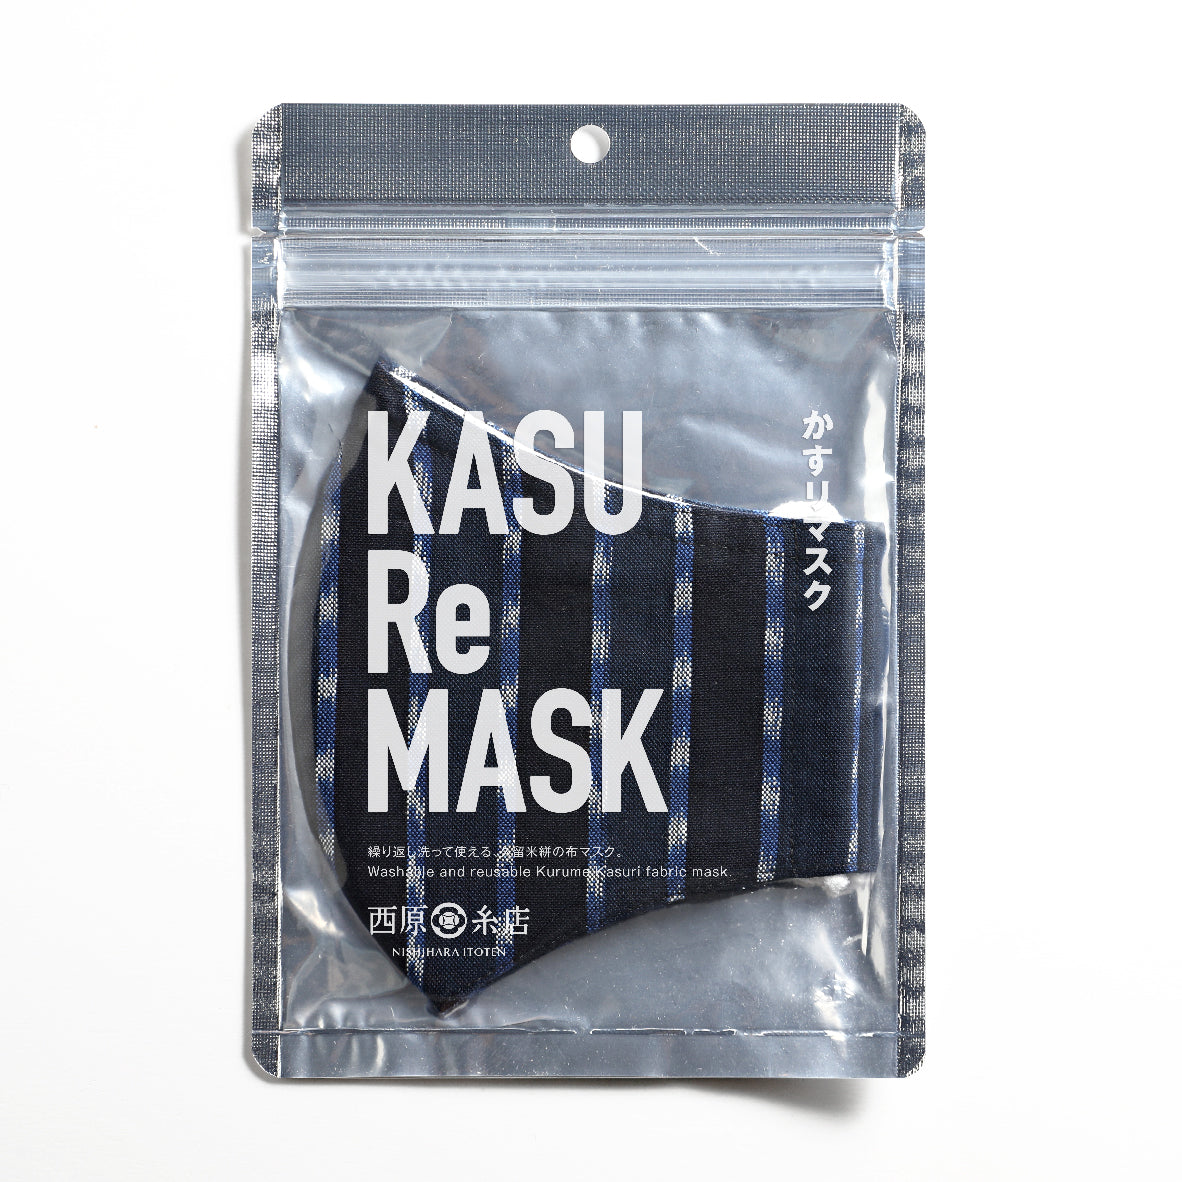 KASU Re MASK かすリマスク【ネイビースクエアライン】